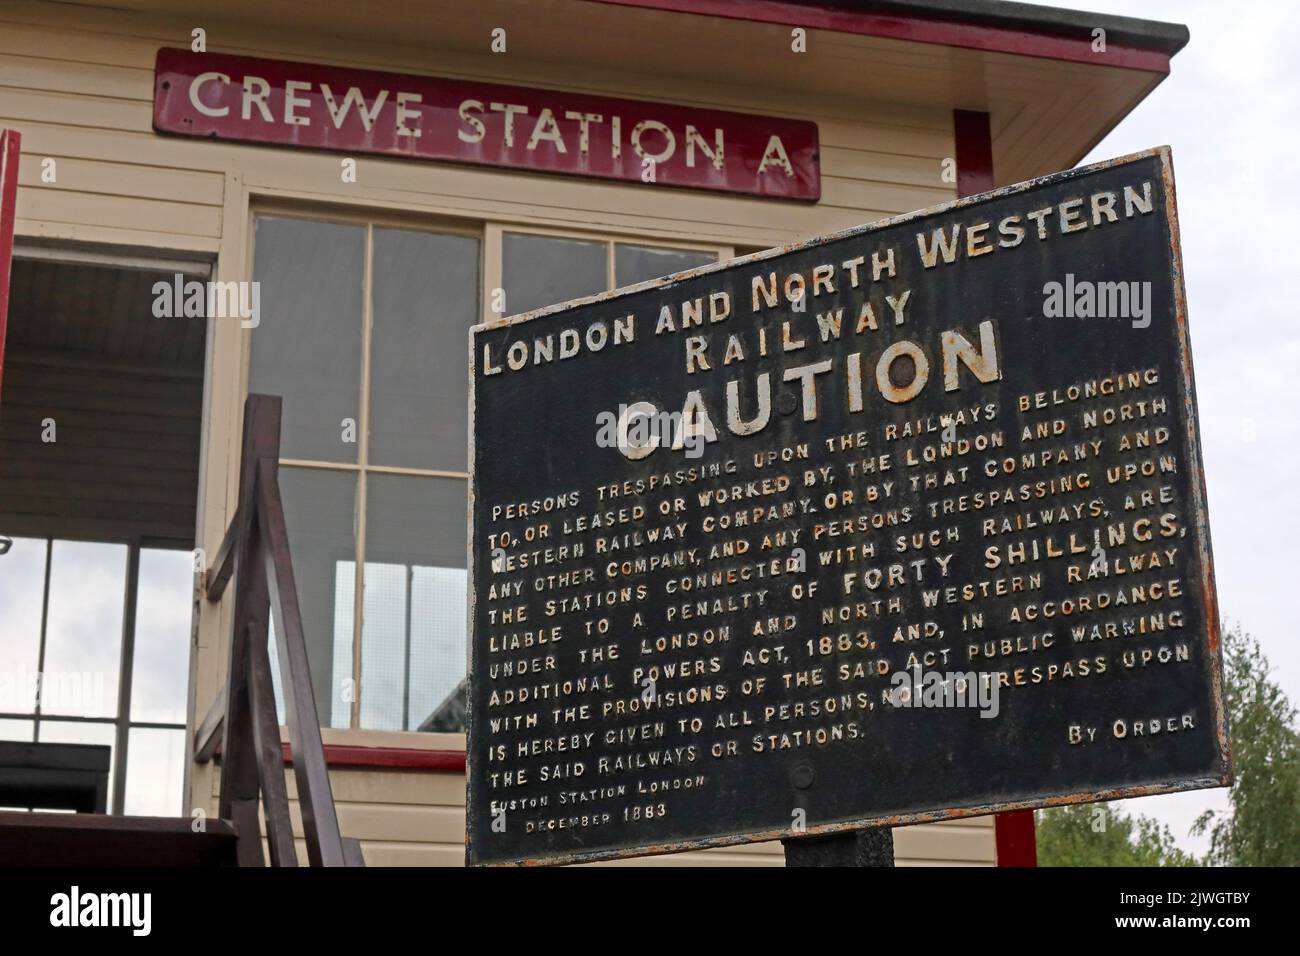 Crewe station A signal box et LNWR London and North Western Railway, panneau d'avertissement, pas d'intrusion à Crewe, Cheshire, Angleterre, Royaume-Uni, CW1 Banque D'Images